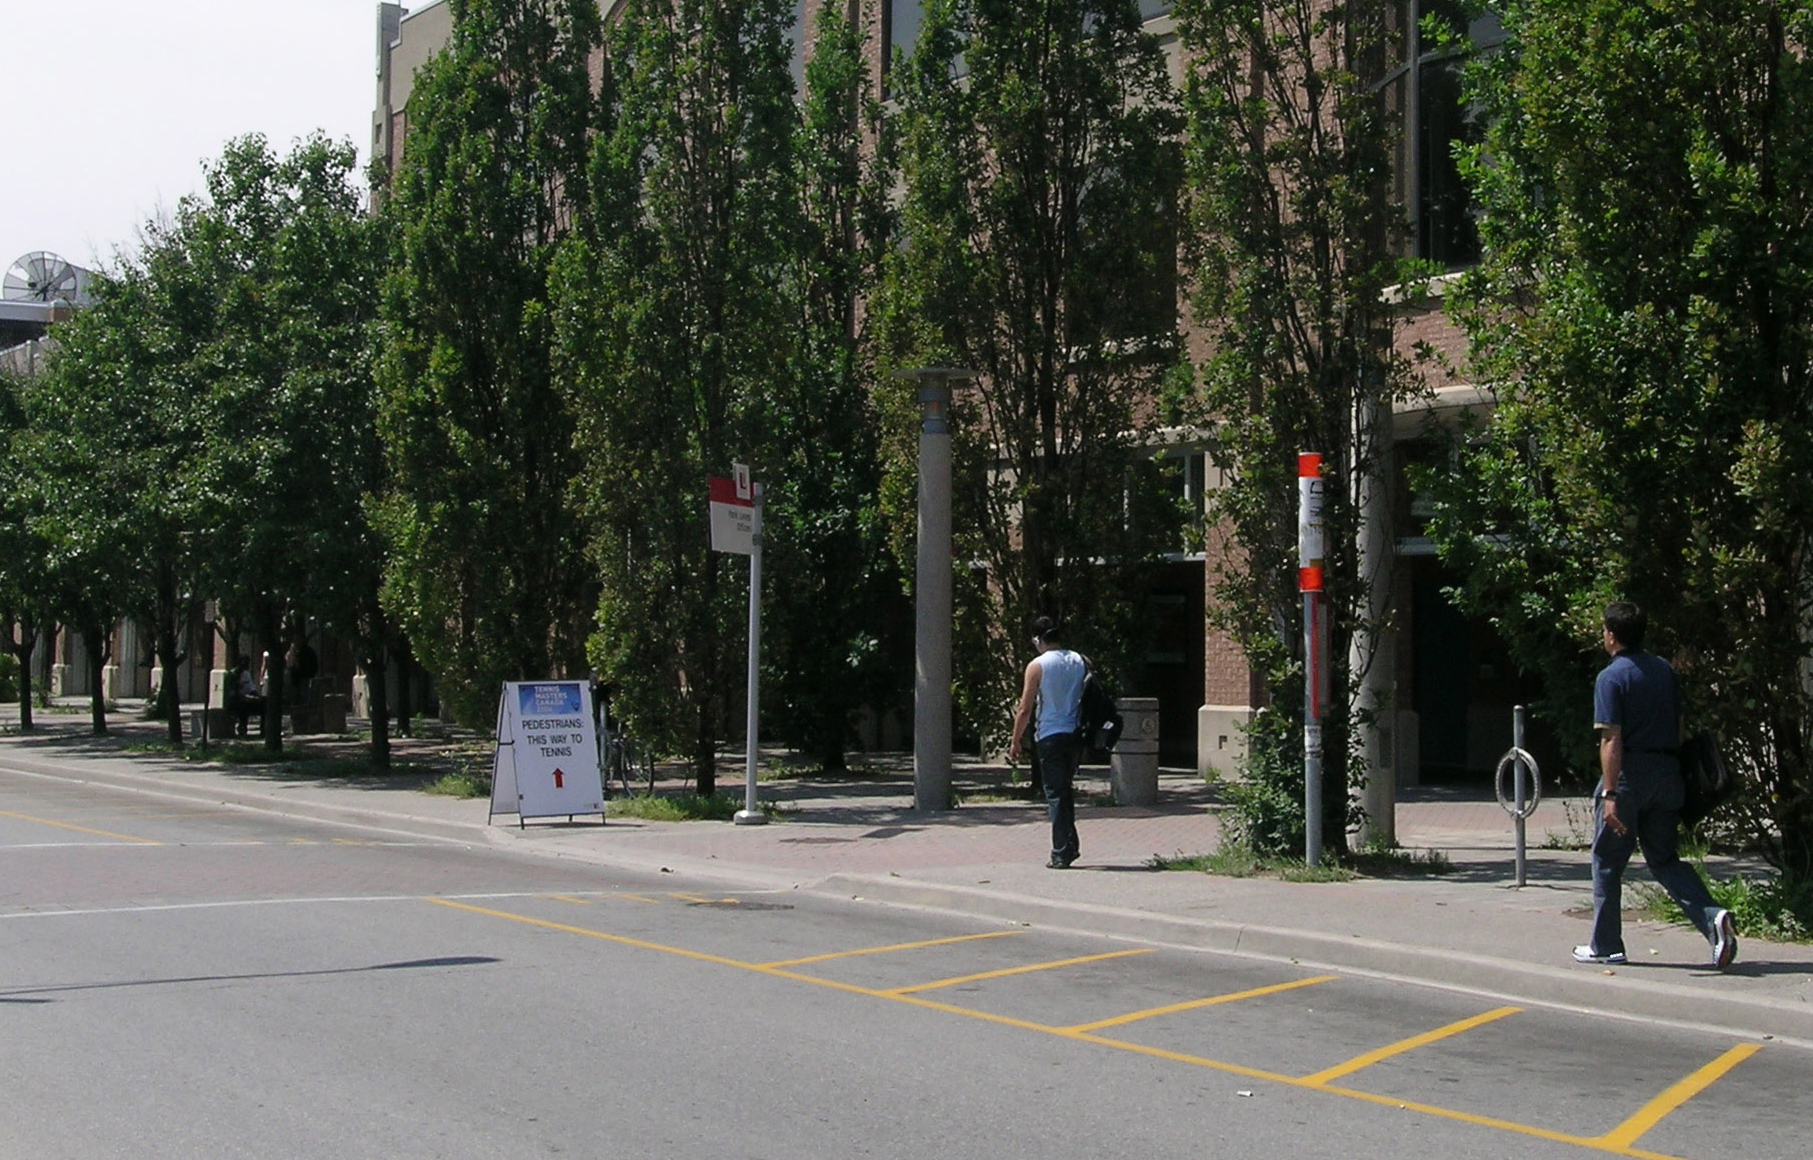 Keele campus bus stop